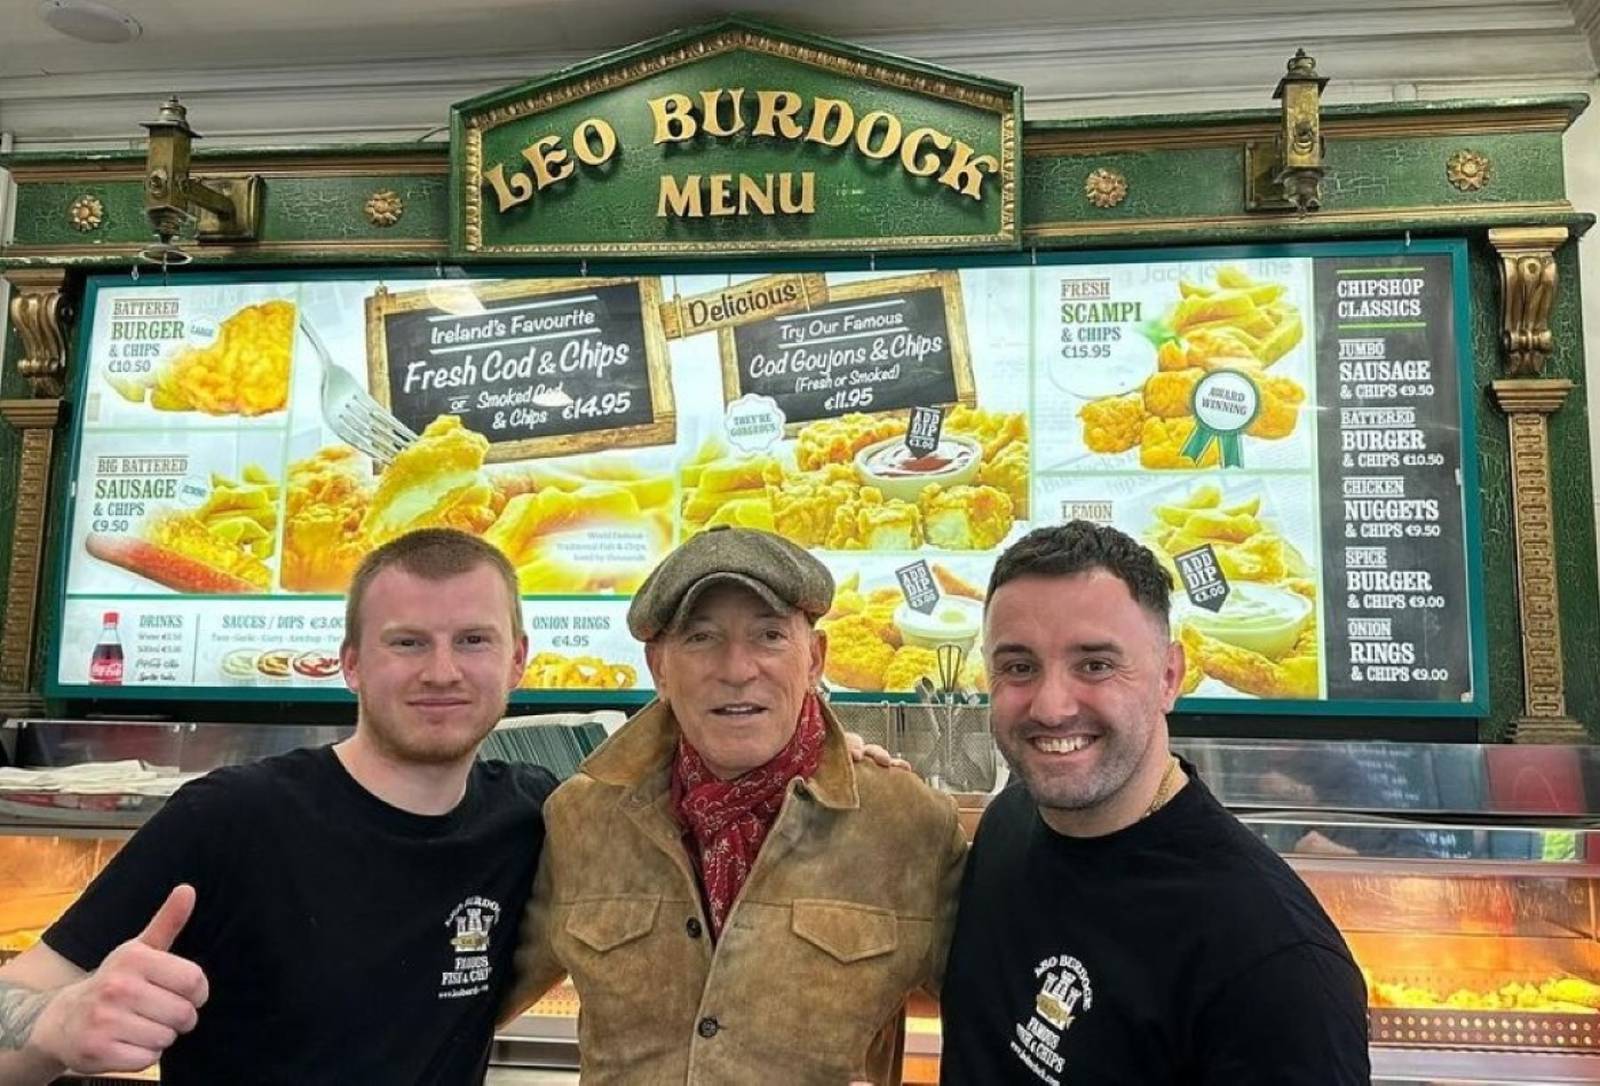 Bruce Springsteen dropped into Leo Burdock's for teh second time durign his Irish tour. Photpgraph: @leoburdockireland/Instagram